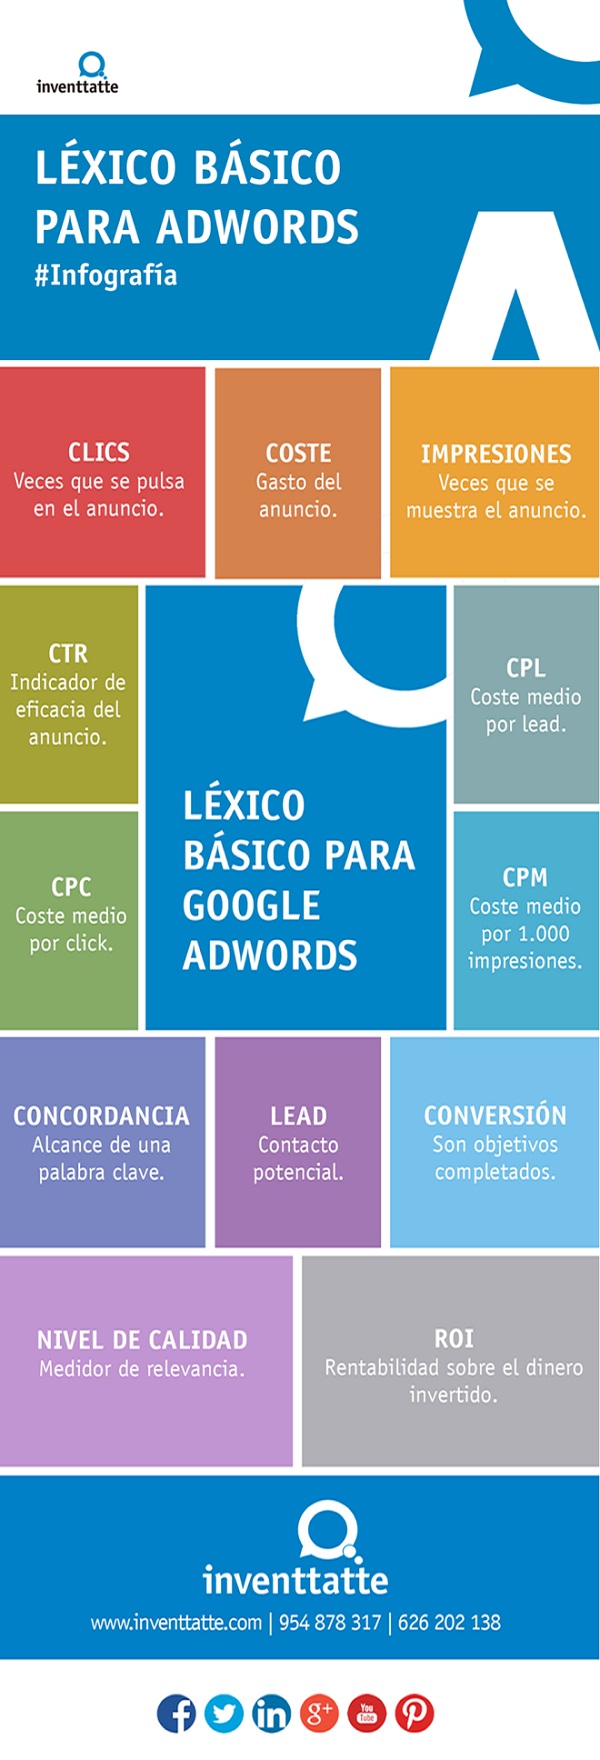 lexico-basico-adwords-infografia